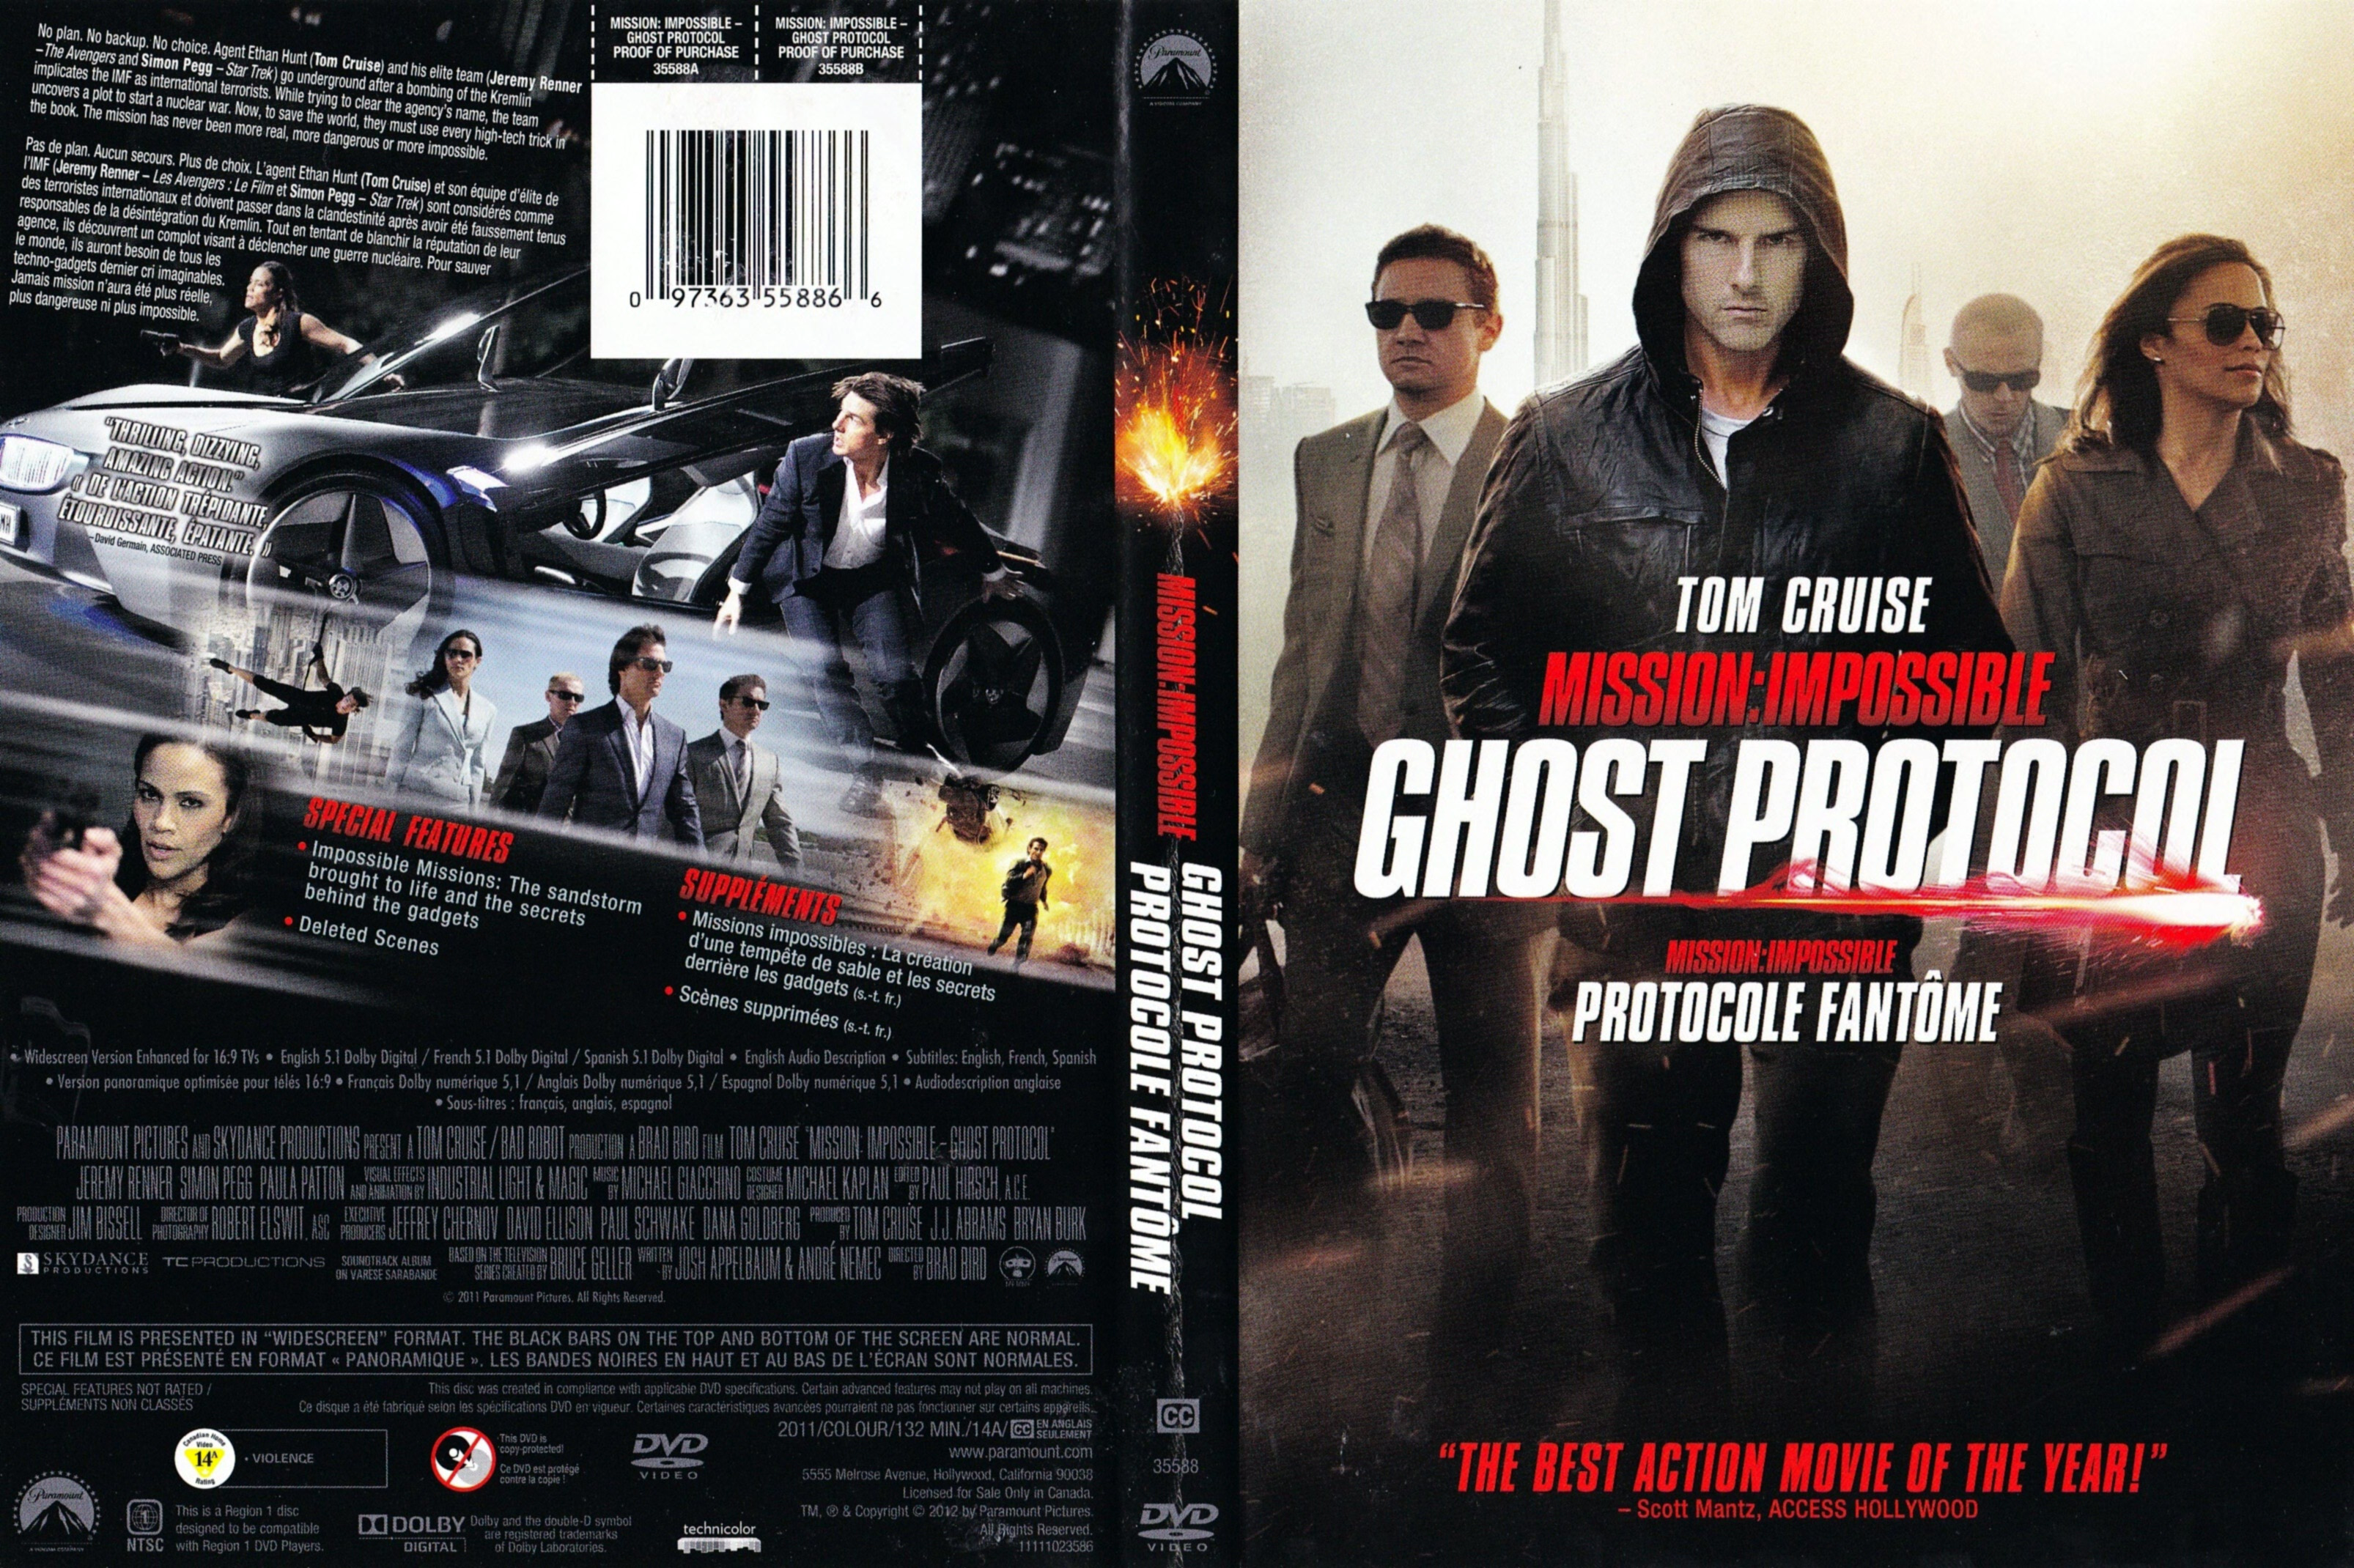 Jaquette DVD Mission Impossible Protocole fantme (Canadienne)